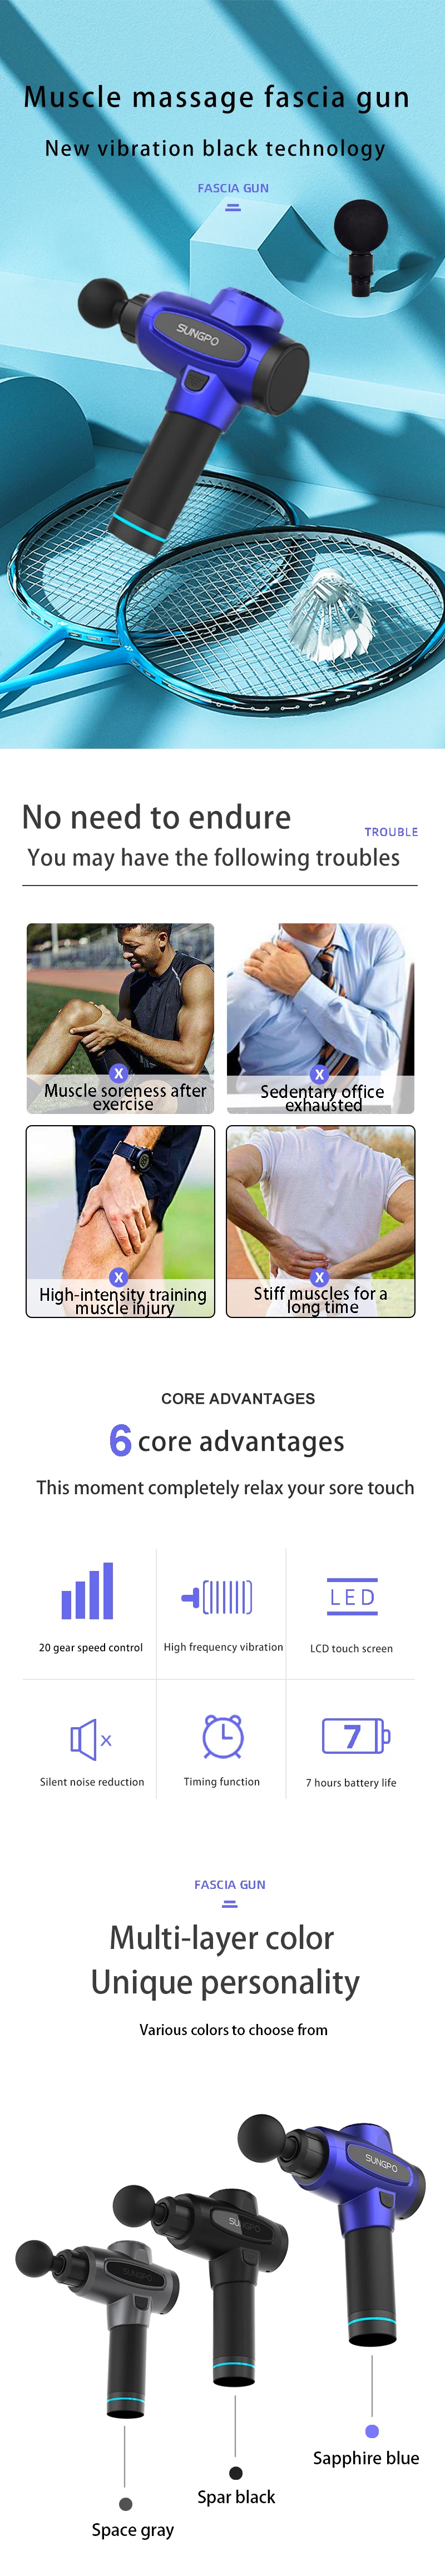 Multifunctional fitness sports massager wireless body relax muscle massage gun